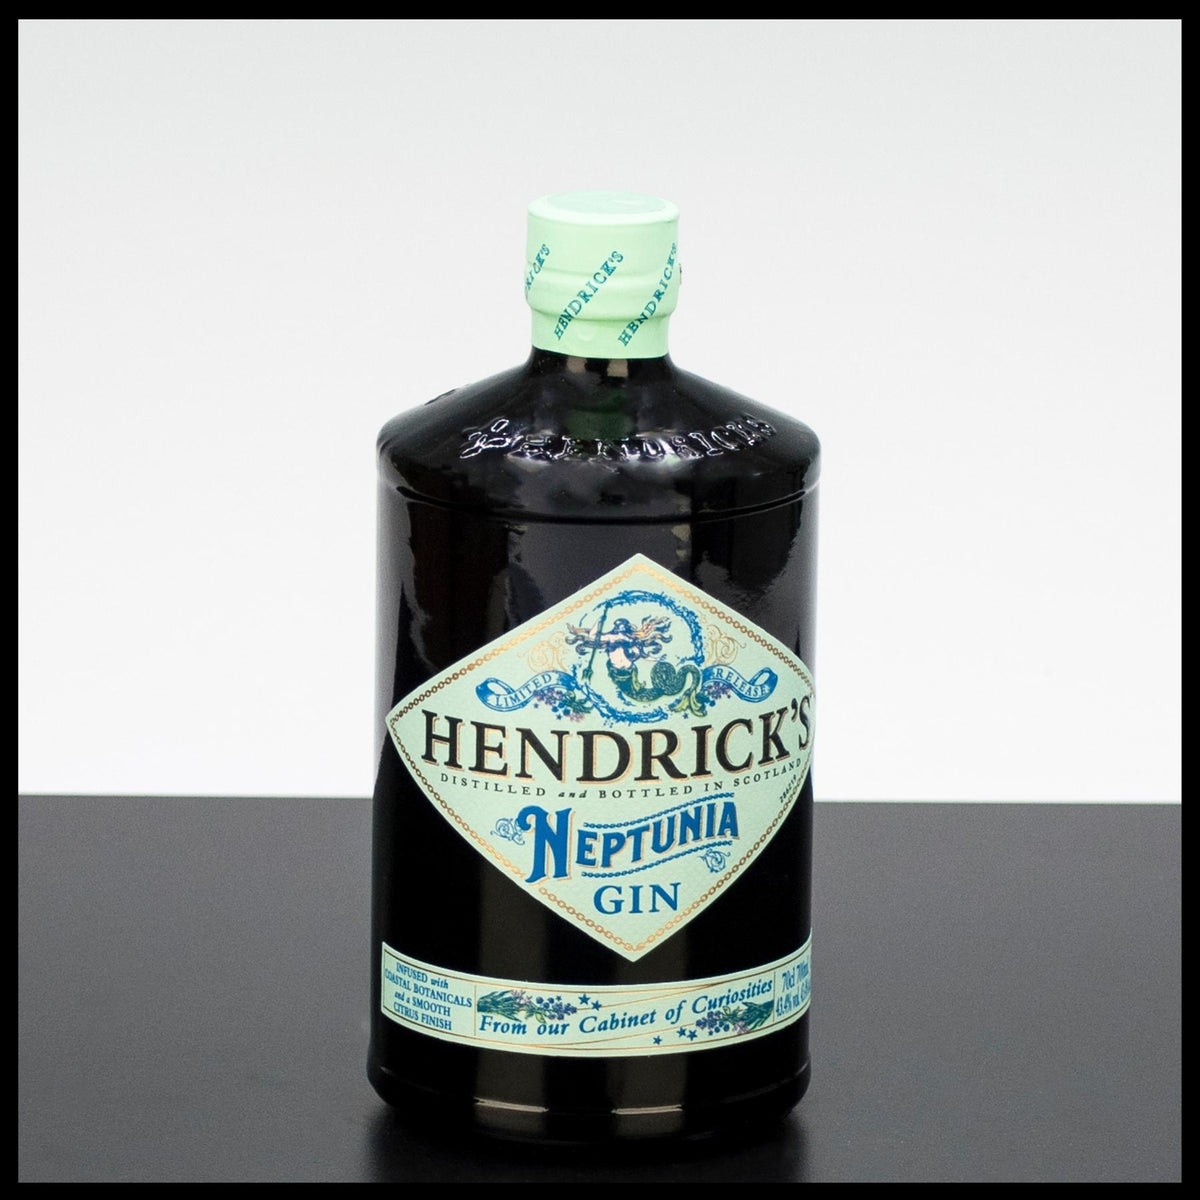 Hendrick's Orbium Gin Limited Release 43,4% vol. Gin